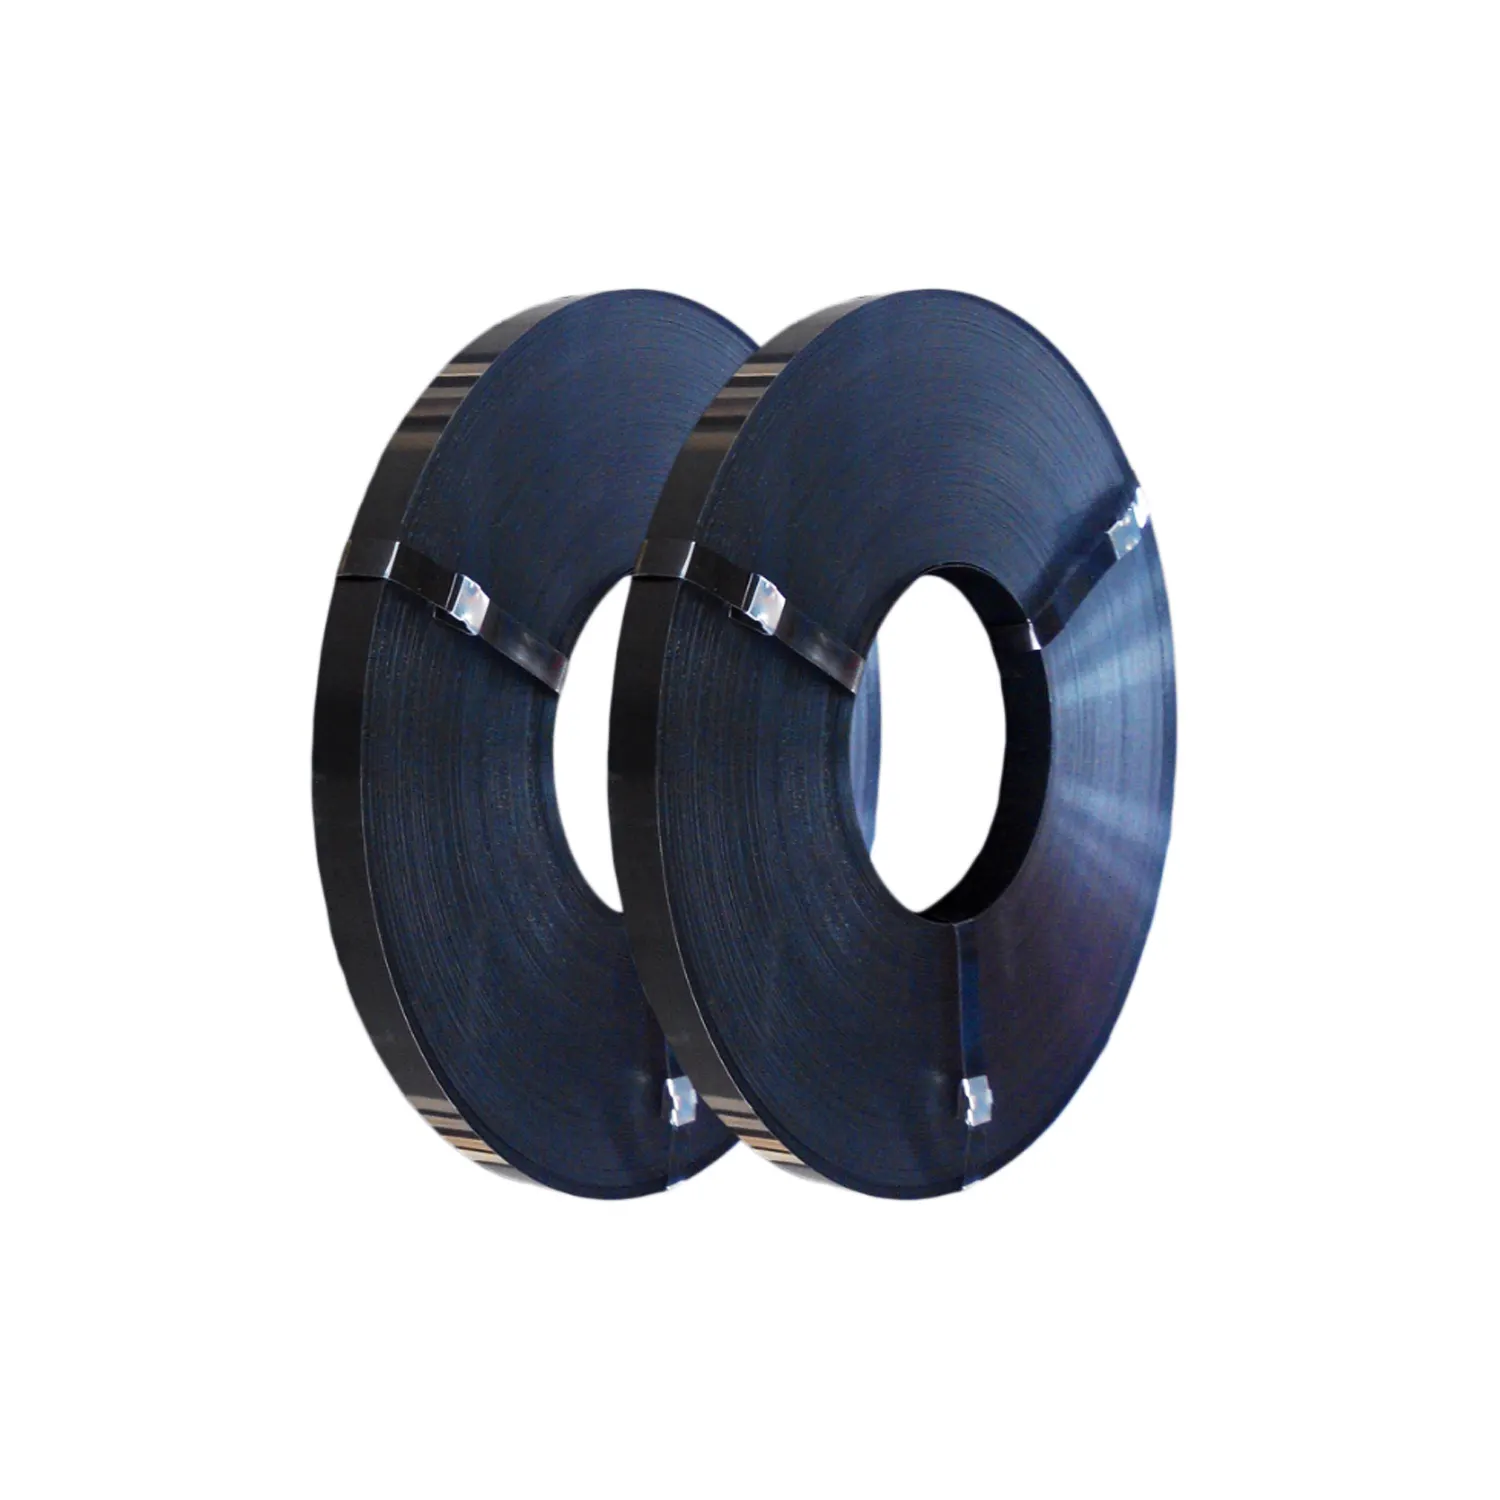 Tira de acero de resorte de 65mn, tecnología de superficie caliente, contenedor de bobina, Material DIN